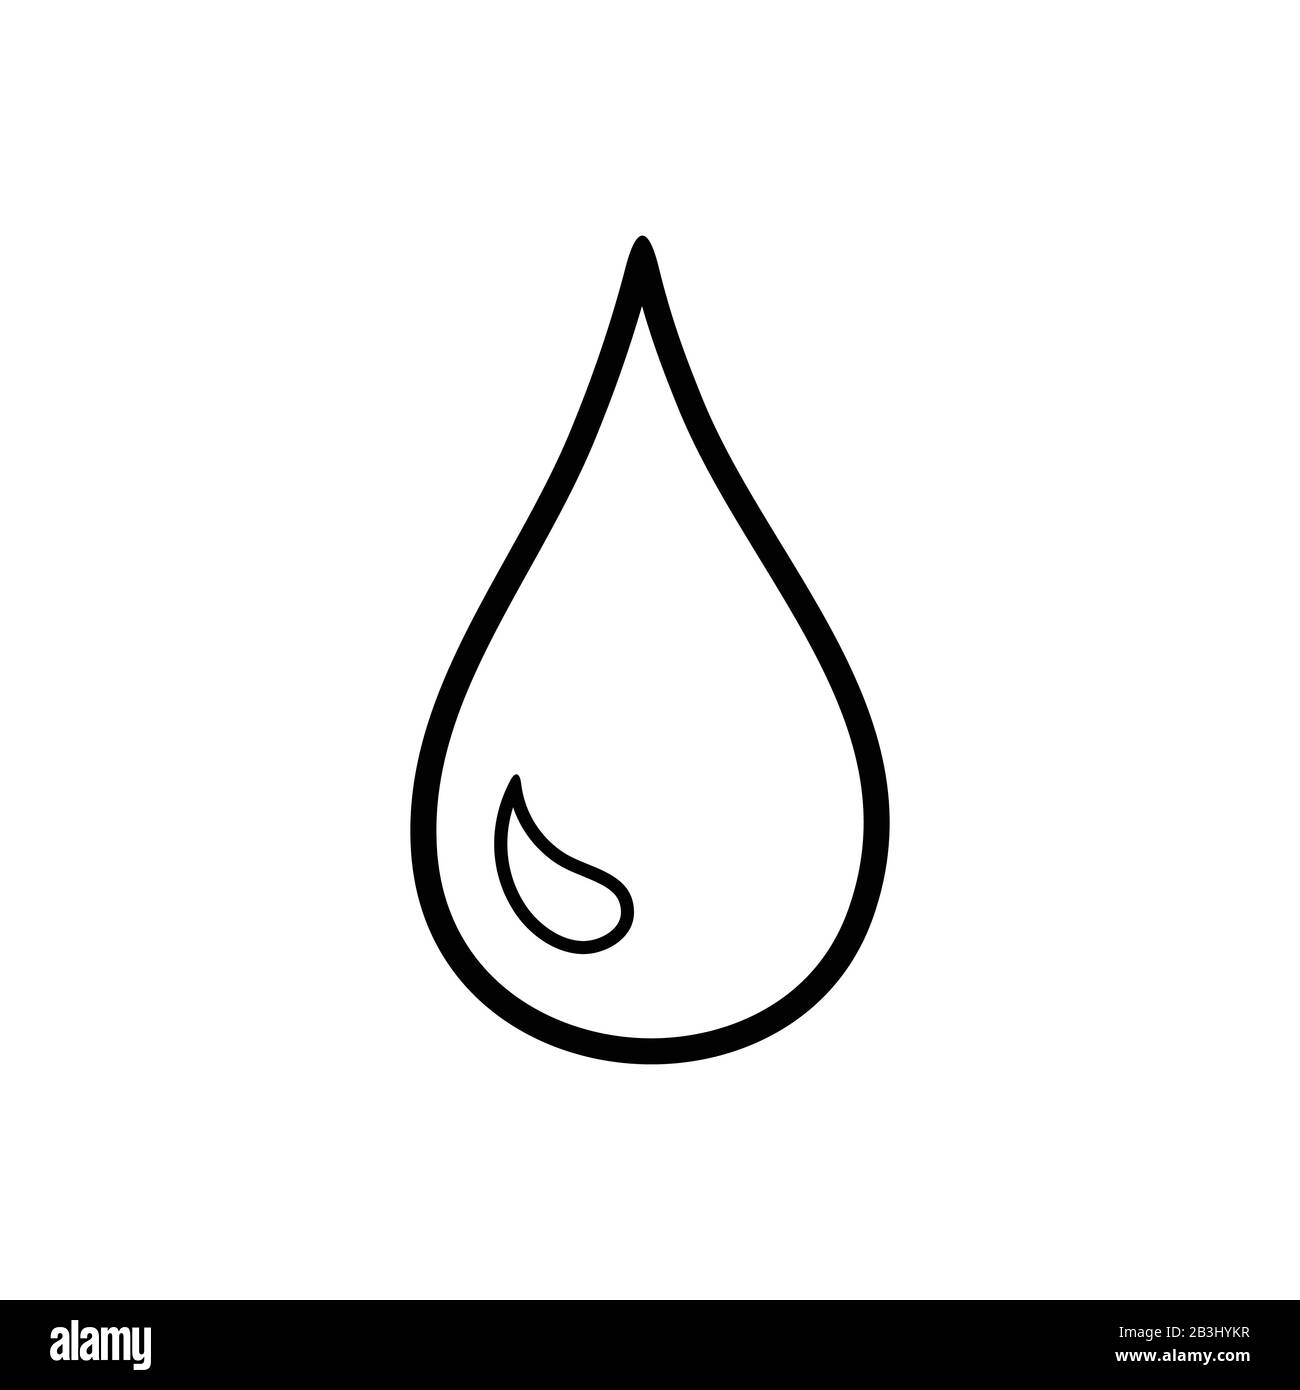 Blood donation logo Black and White Stock Photos & Images - Alamy